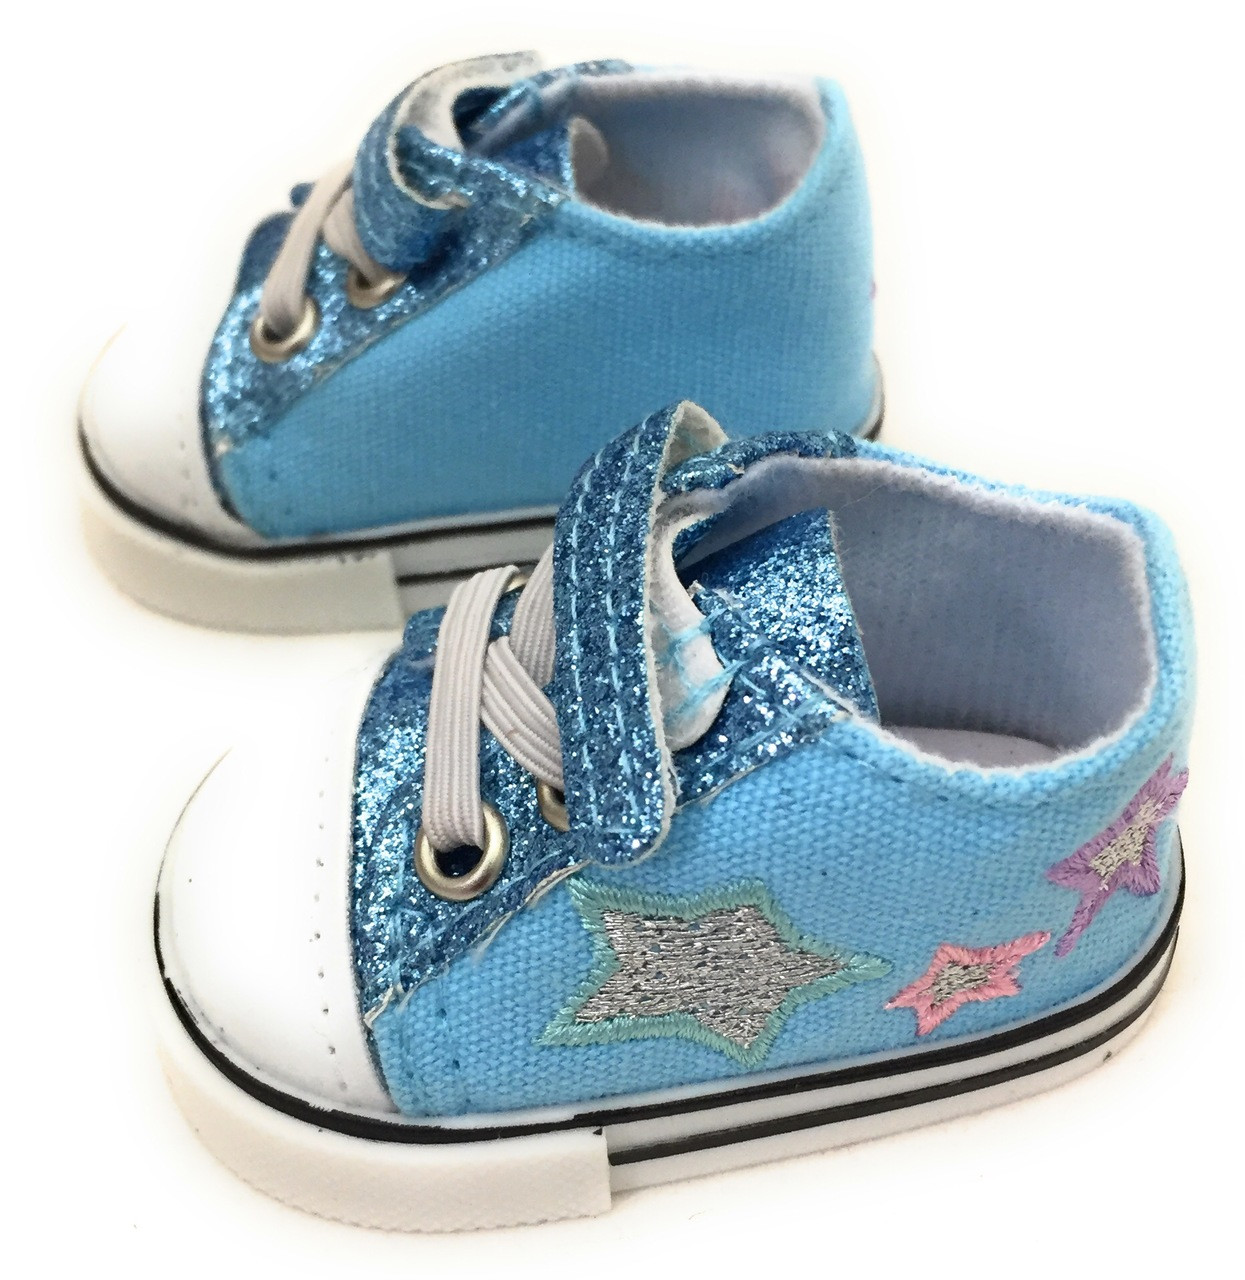 blue glitter tennis shoes